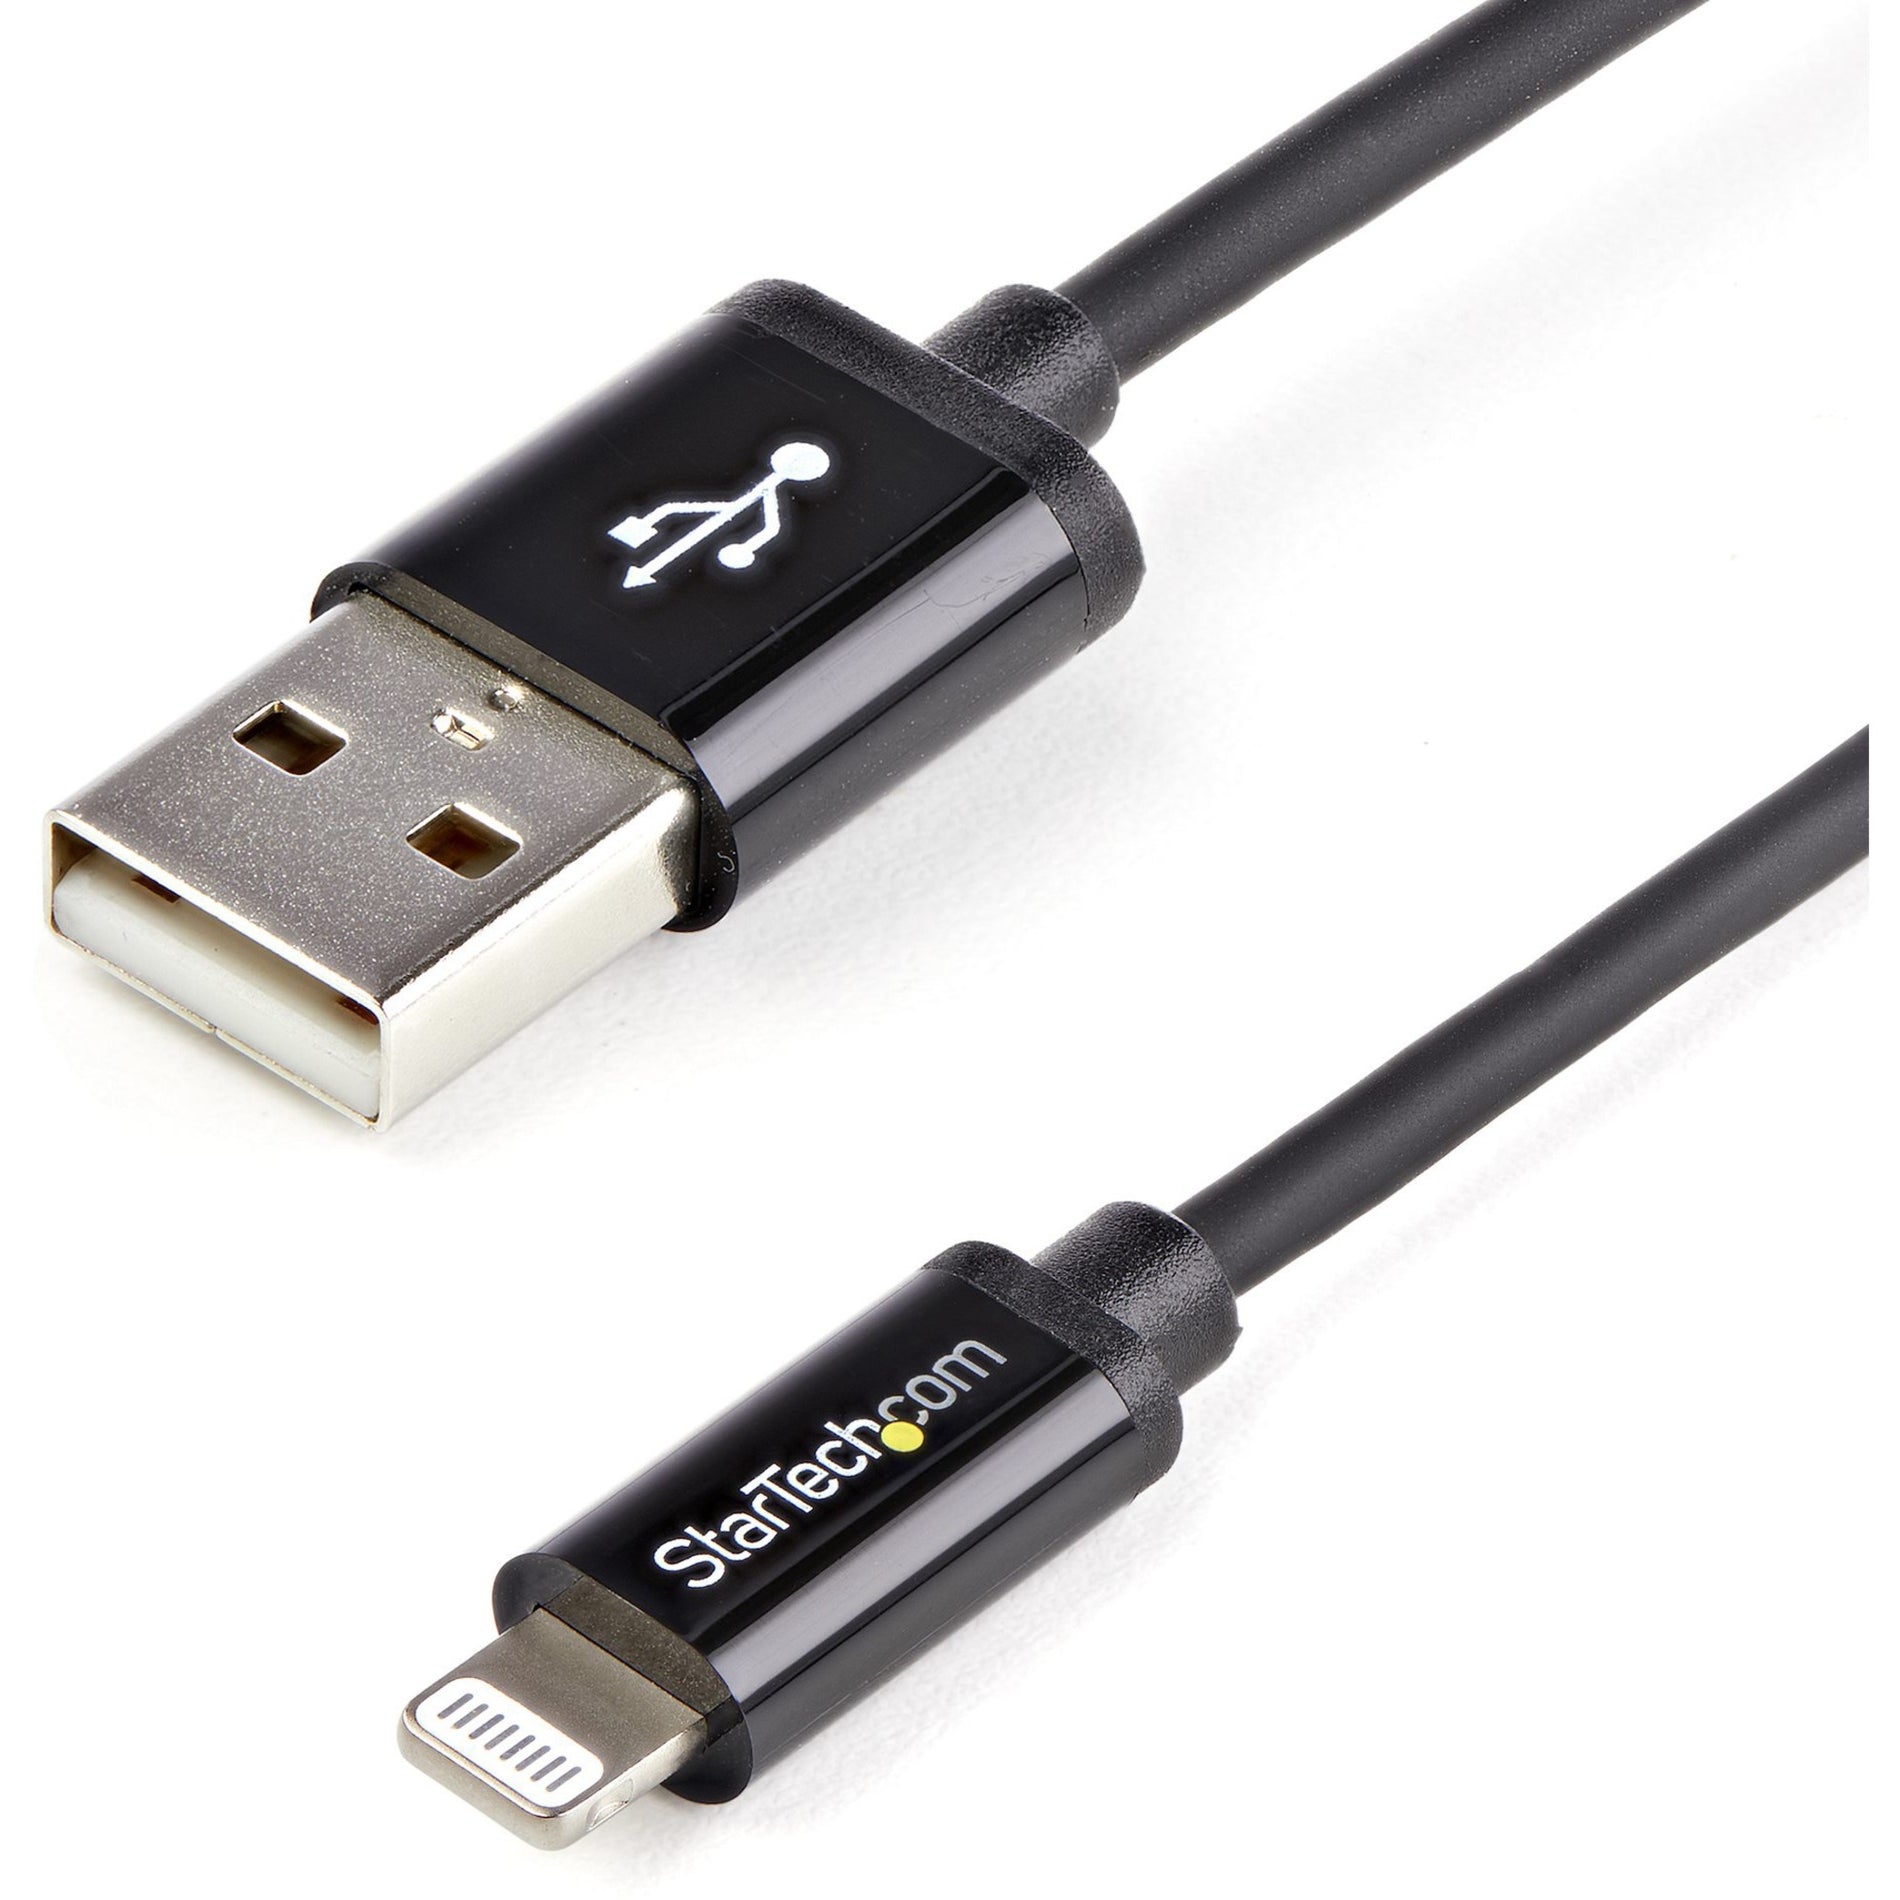 StarTech.com USBLT2MB Sync/Charge Lightning/USB Data Transfer Cable, 6ft Long, Black